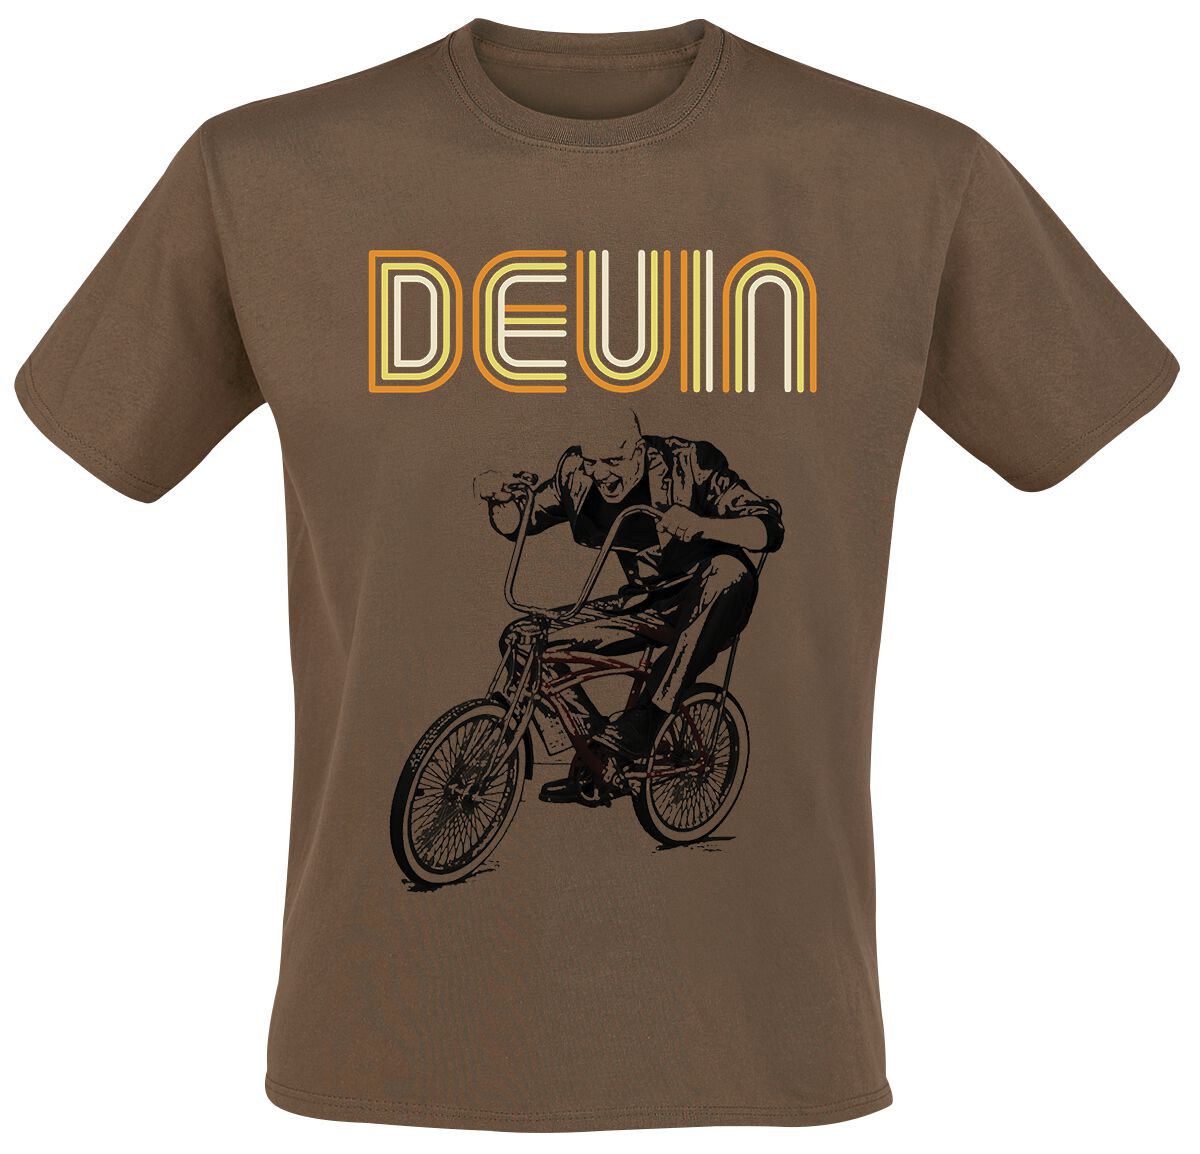 Image of Devin Townsend Chopper T-Shirt braun